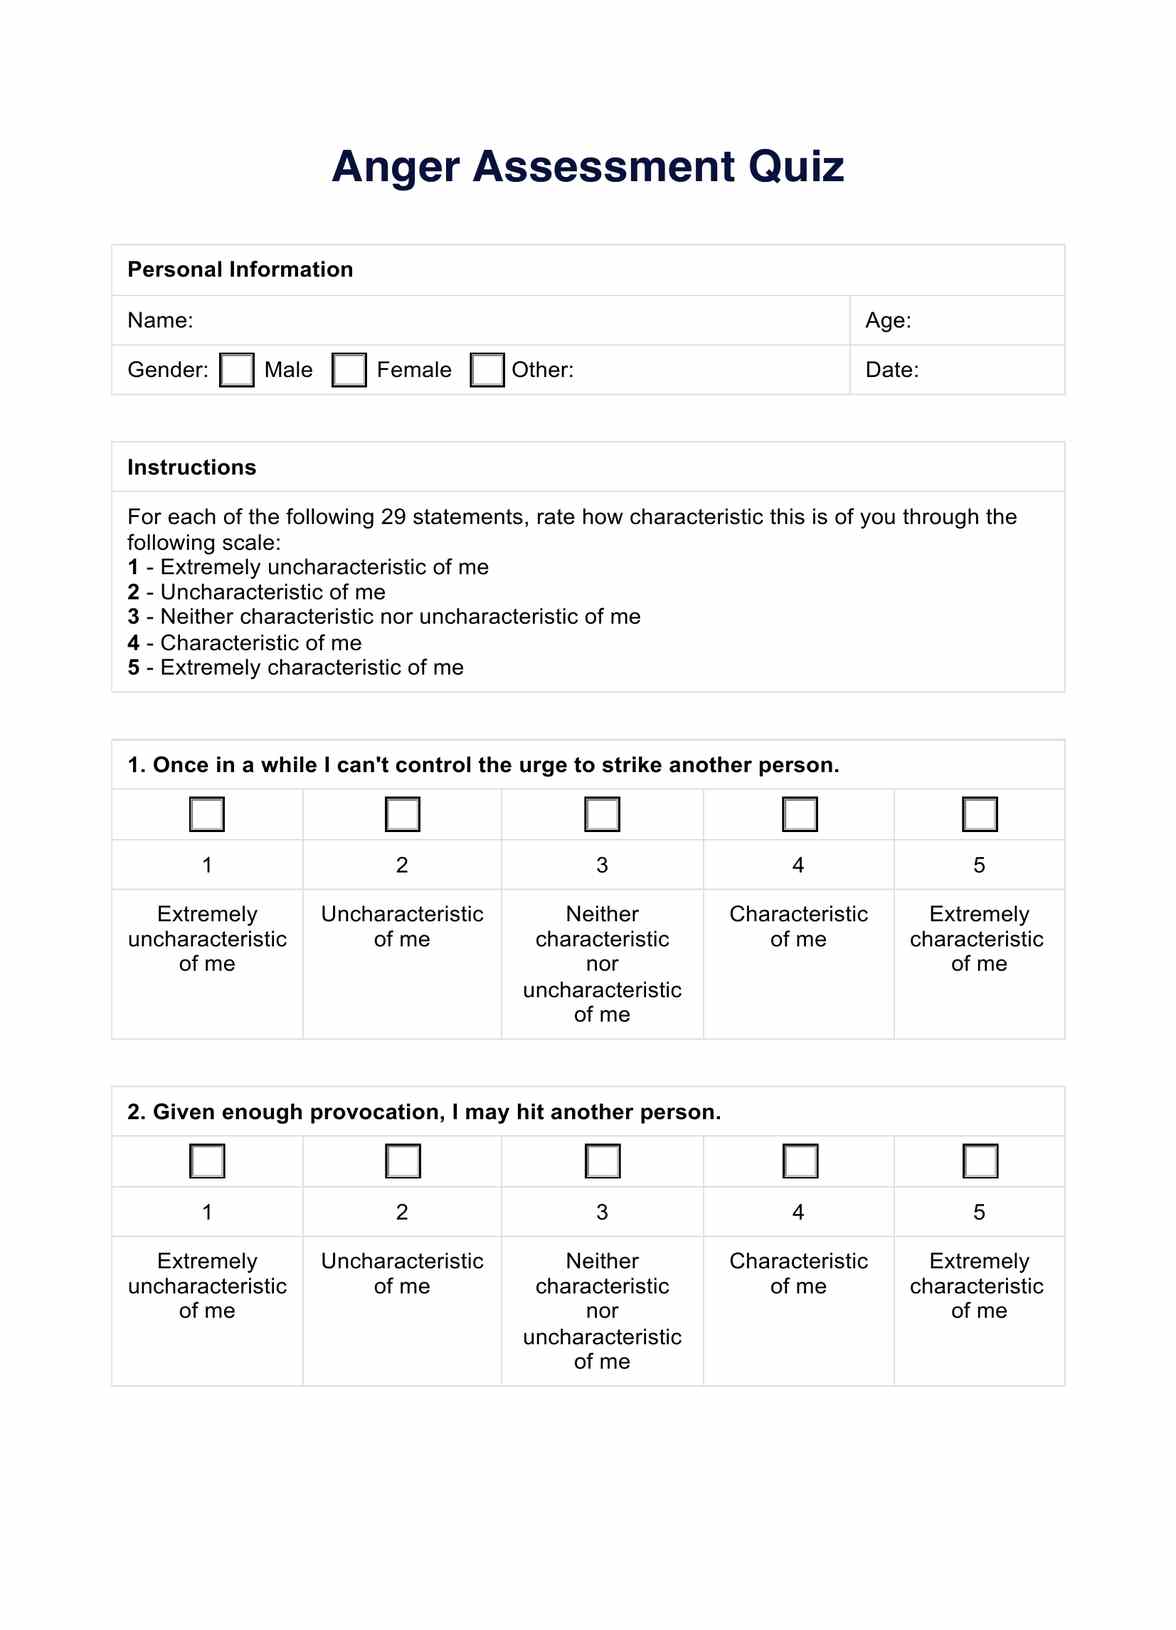 Anger Assessment Quiz PDF Example